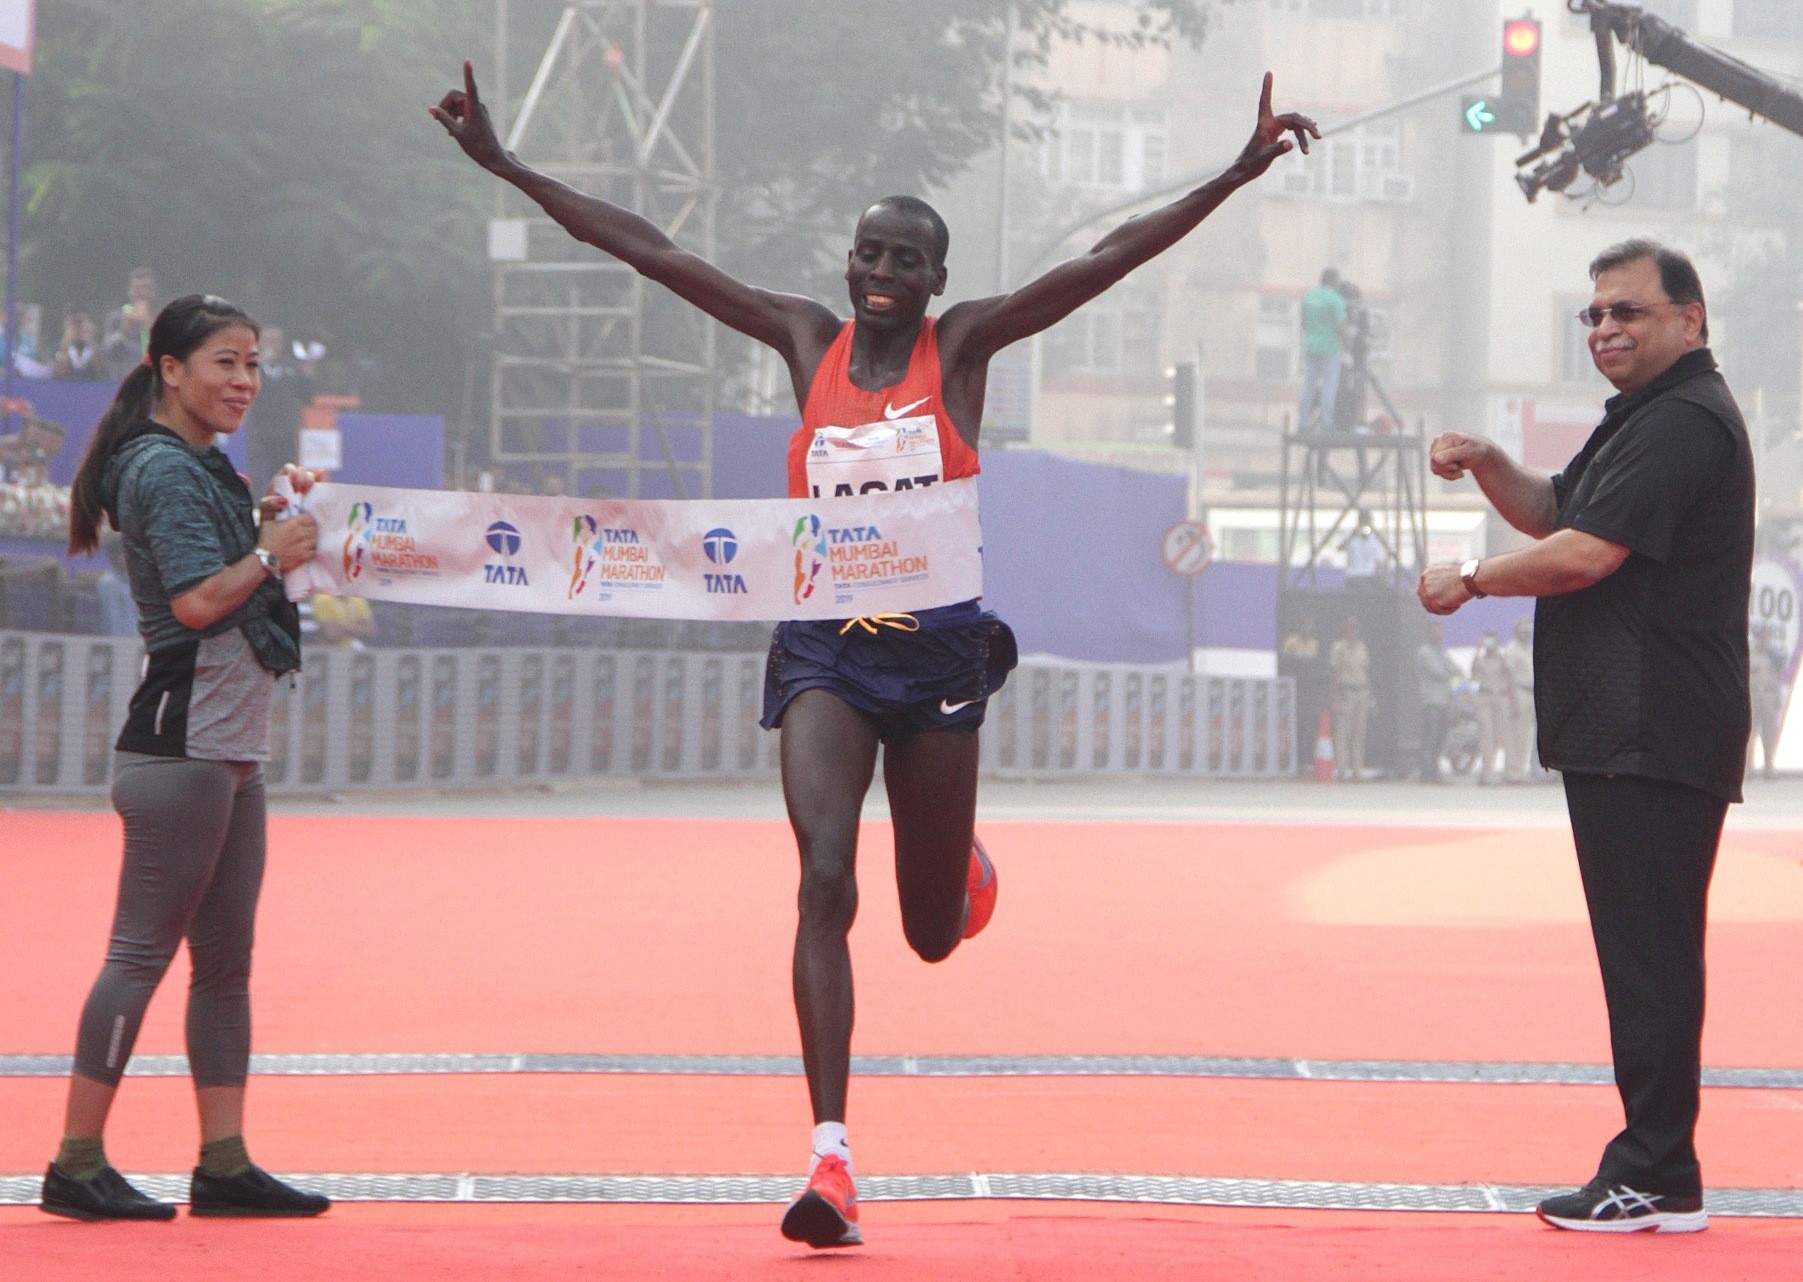 Kenya's Cosmas Lagat wins at the Tata Mumbai Marathon 2019 / Photo credit Procam International